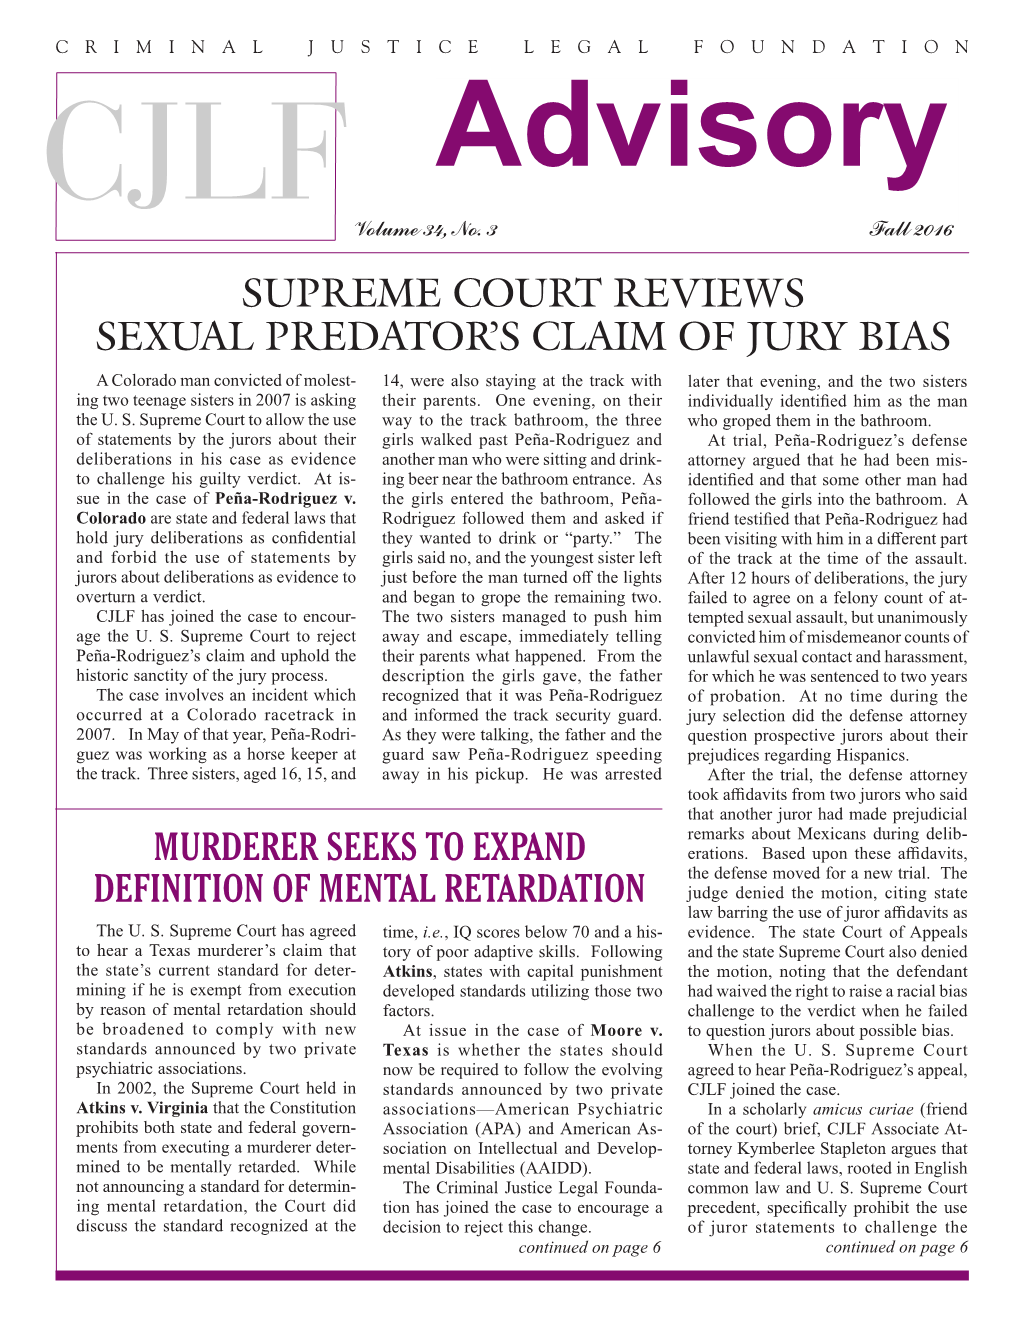 Supreme Court Reviews Sexual Predator's Claim Of